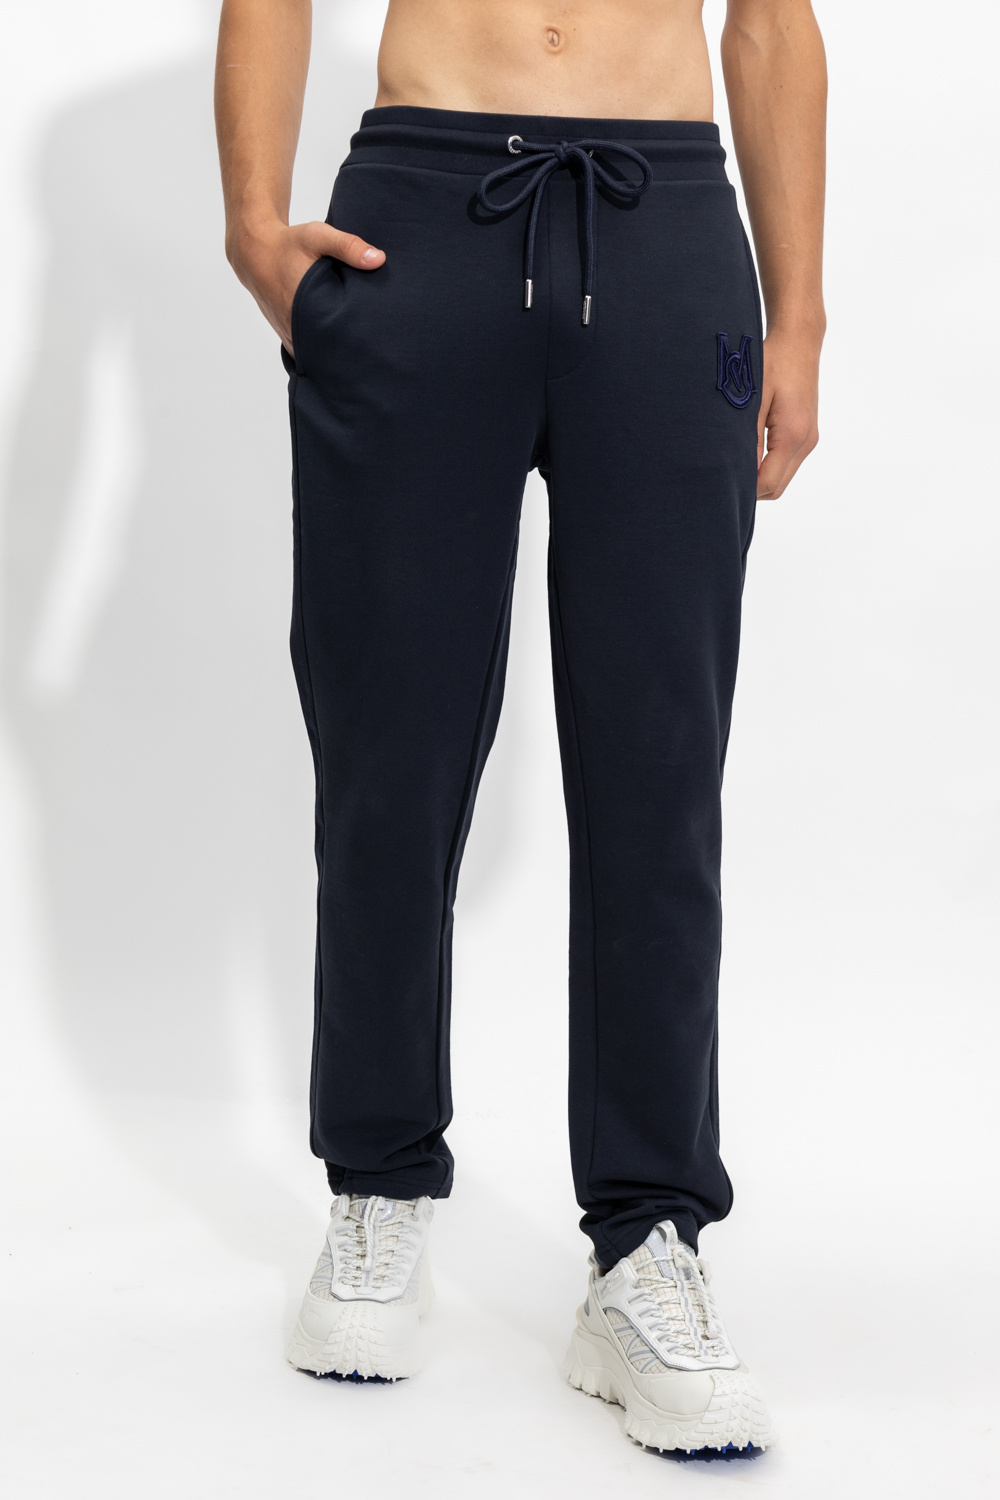 Moncler j brand blue shorts